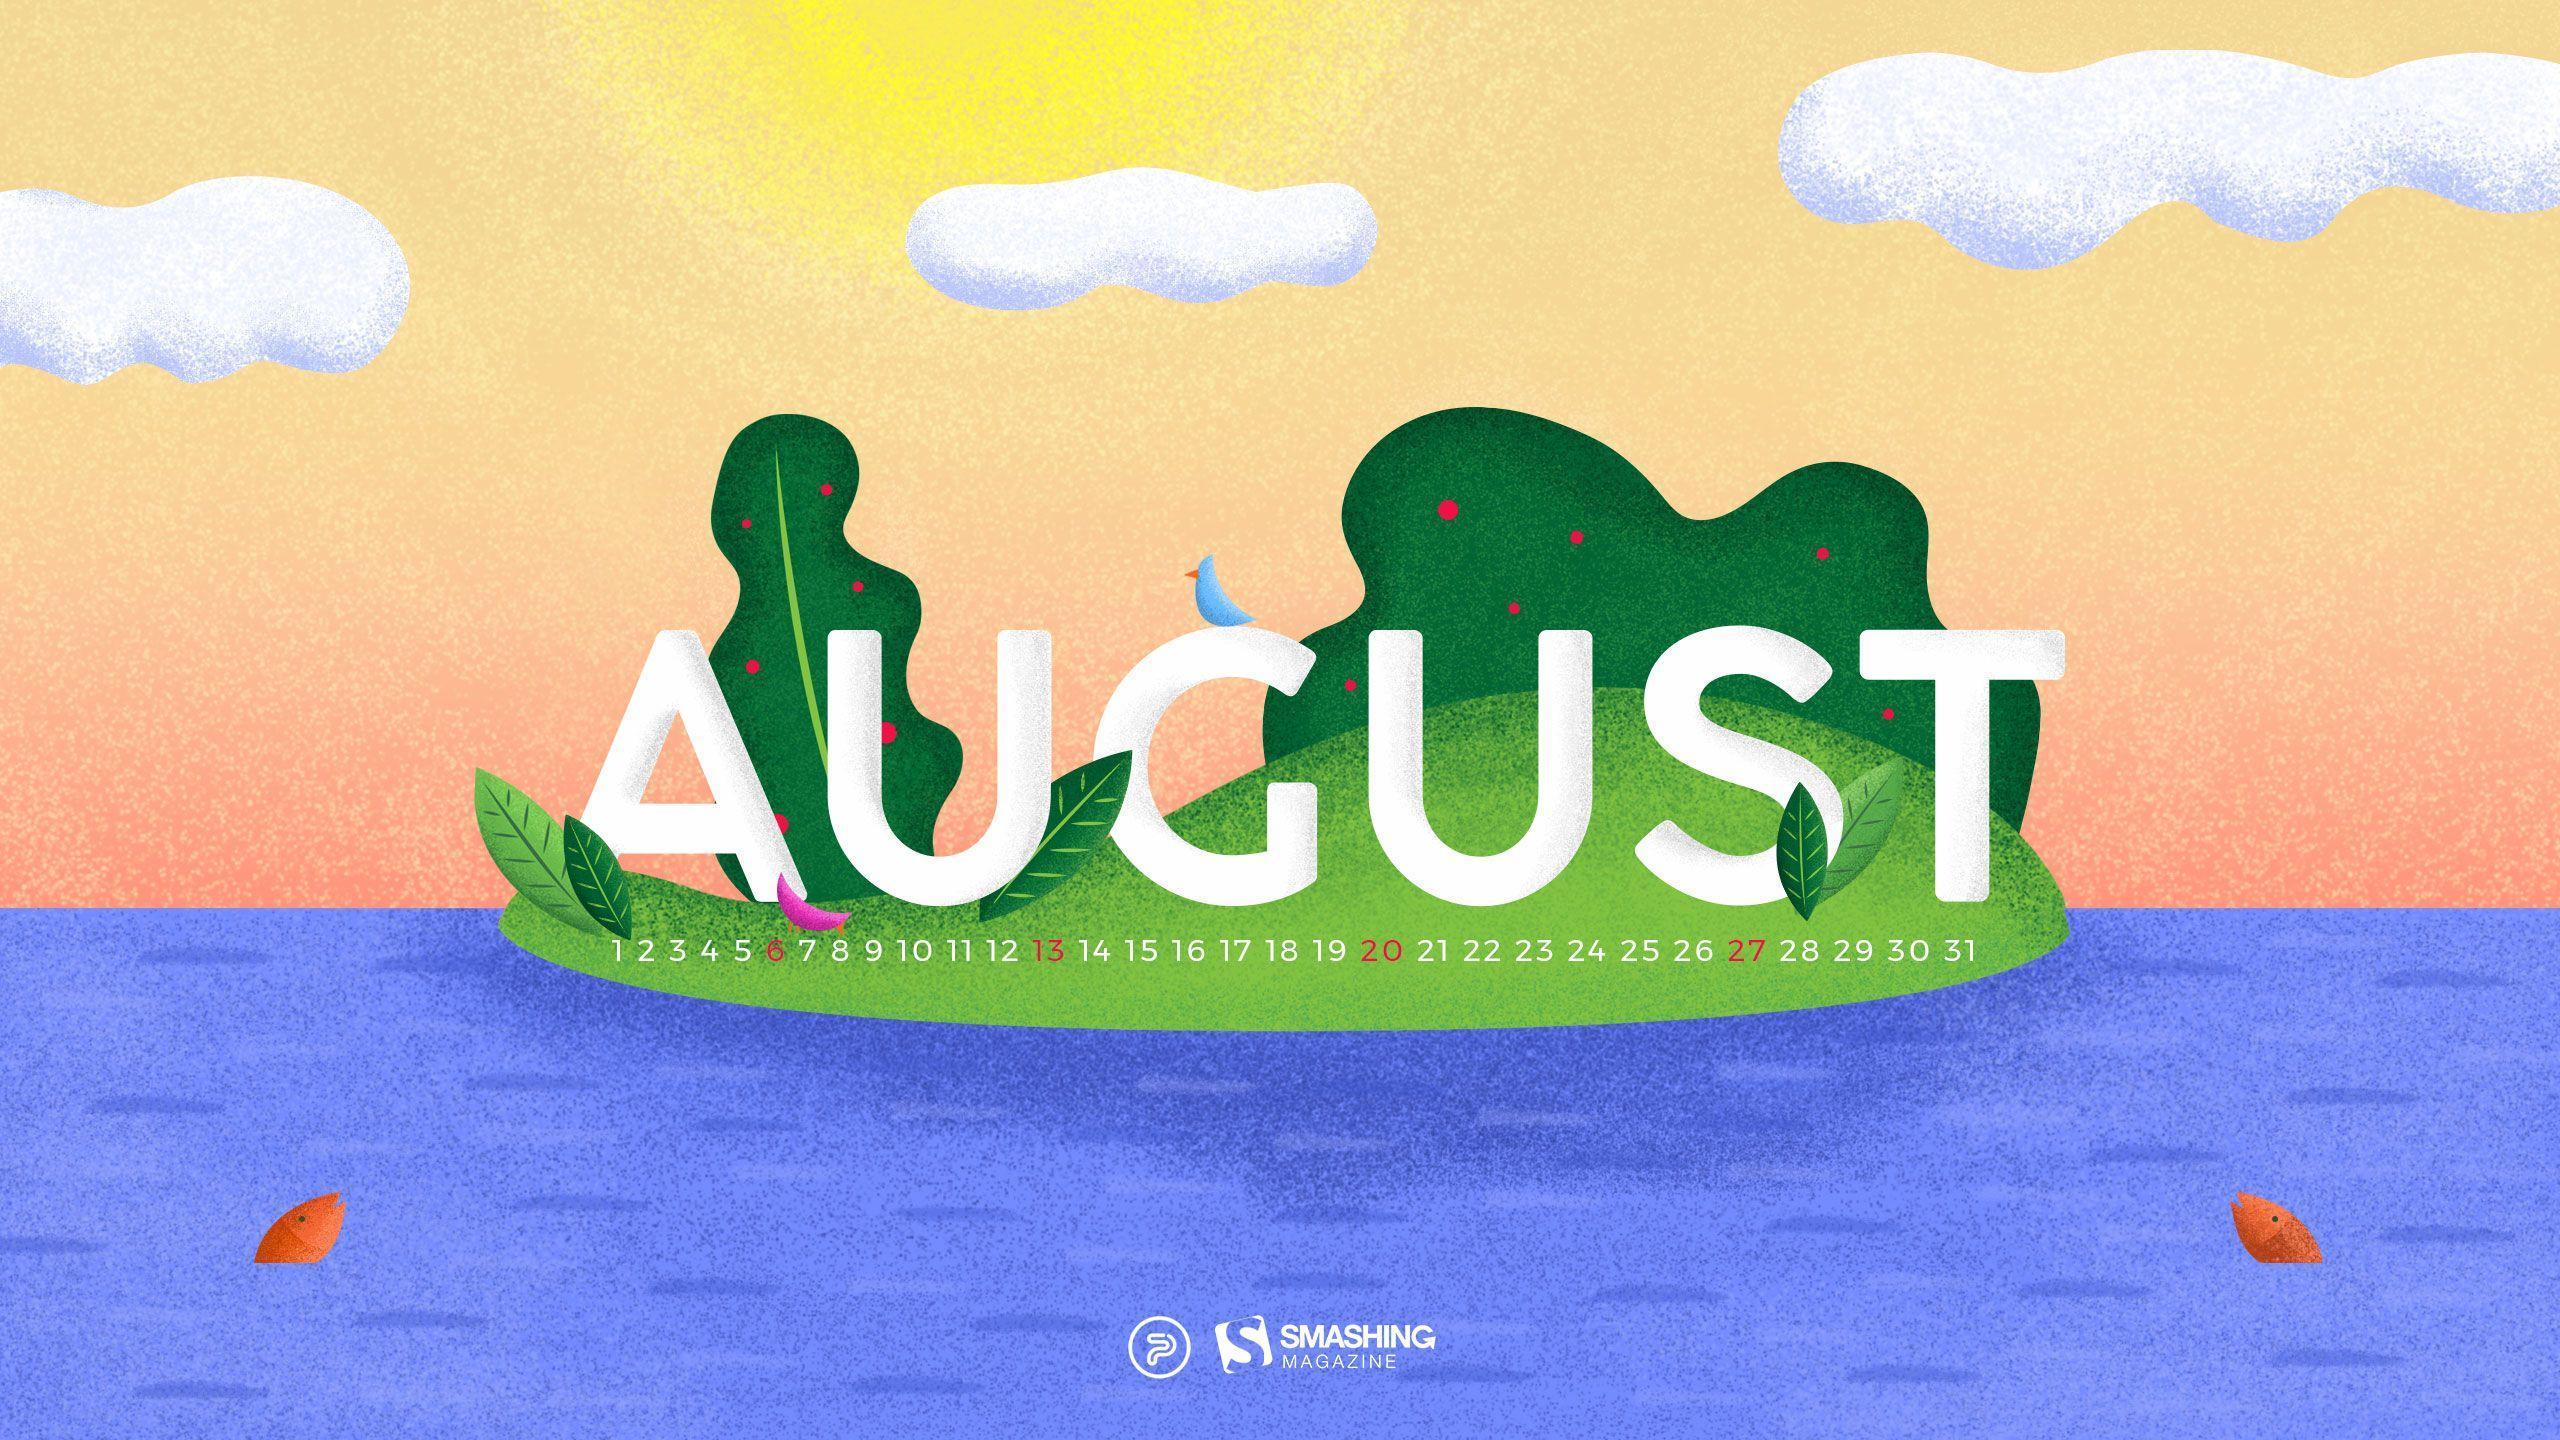 Summer Bliss And August Adventures: Wallpaper To Kick Start